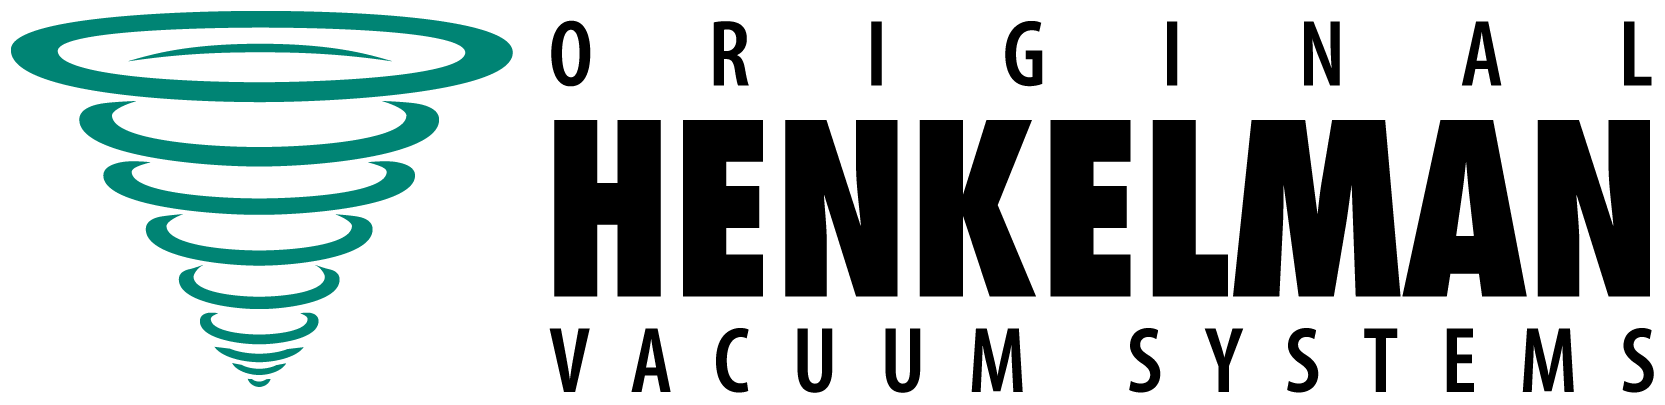 Logo Henkelman zw pms 327